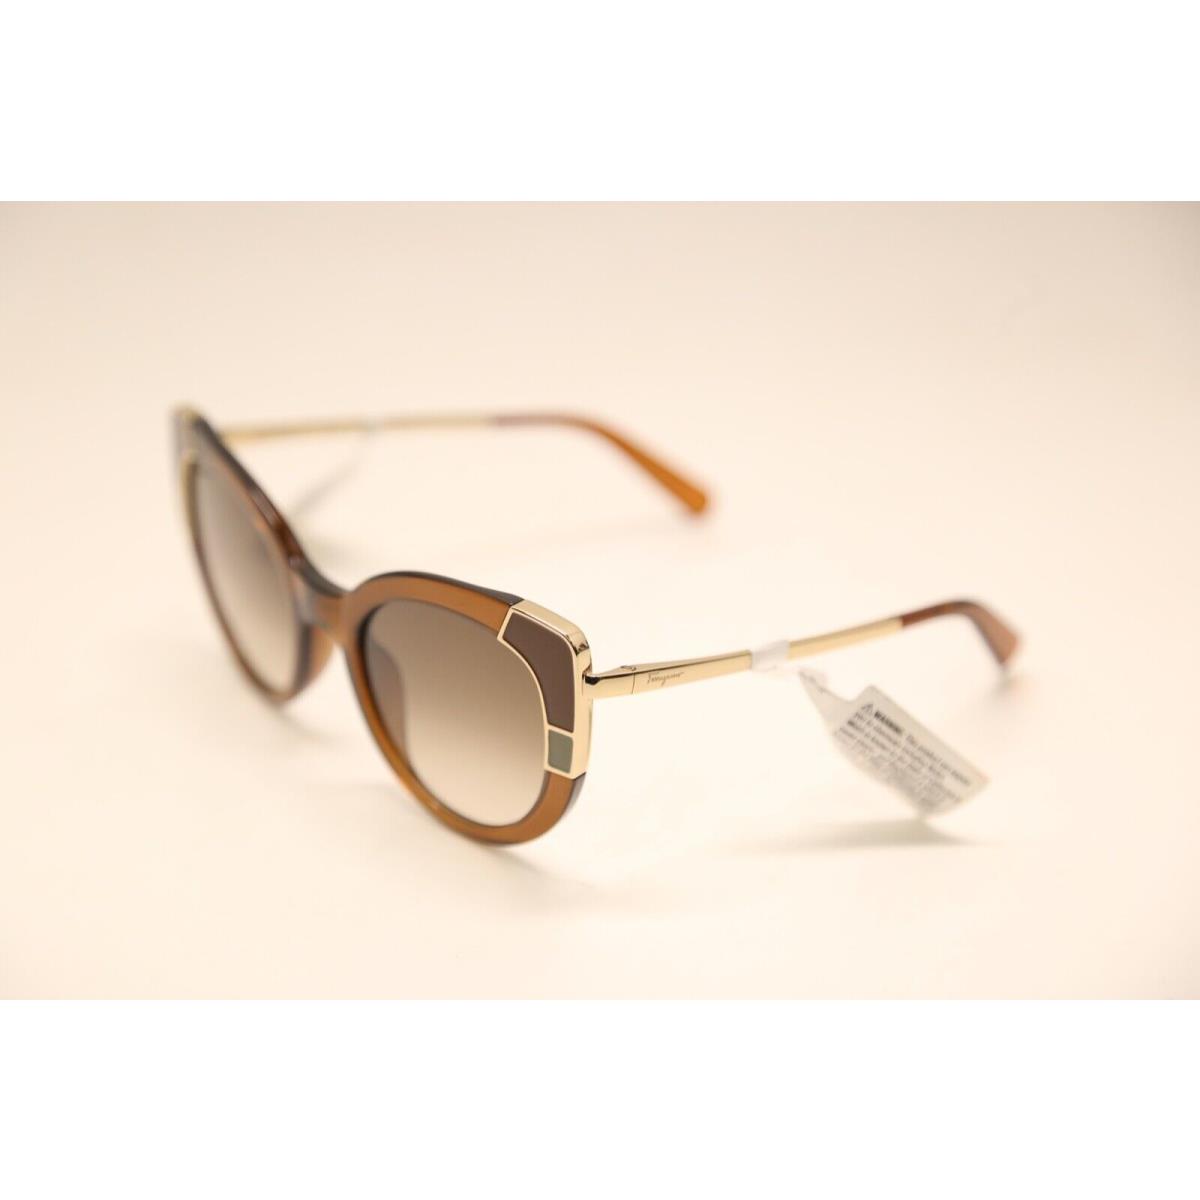 Salvatore Ferragamo sunglasses  - Crystal Brown Frame, Brown Lens 1